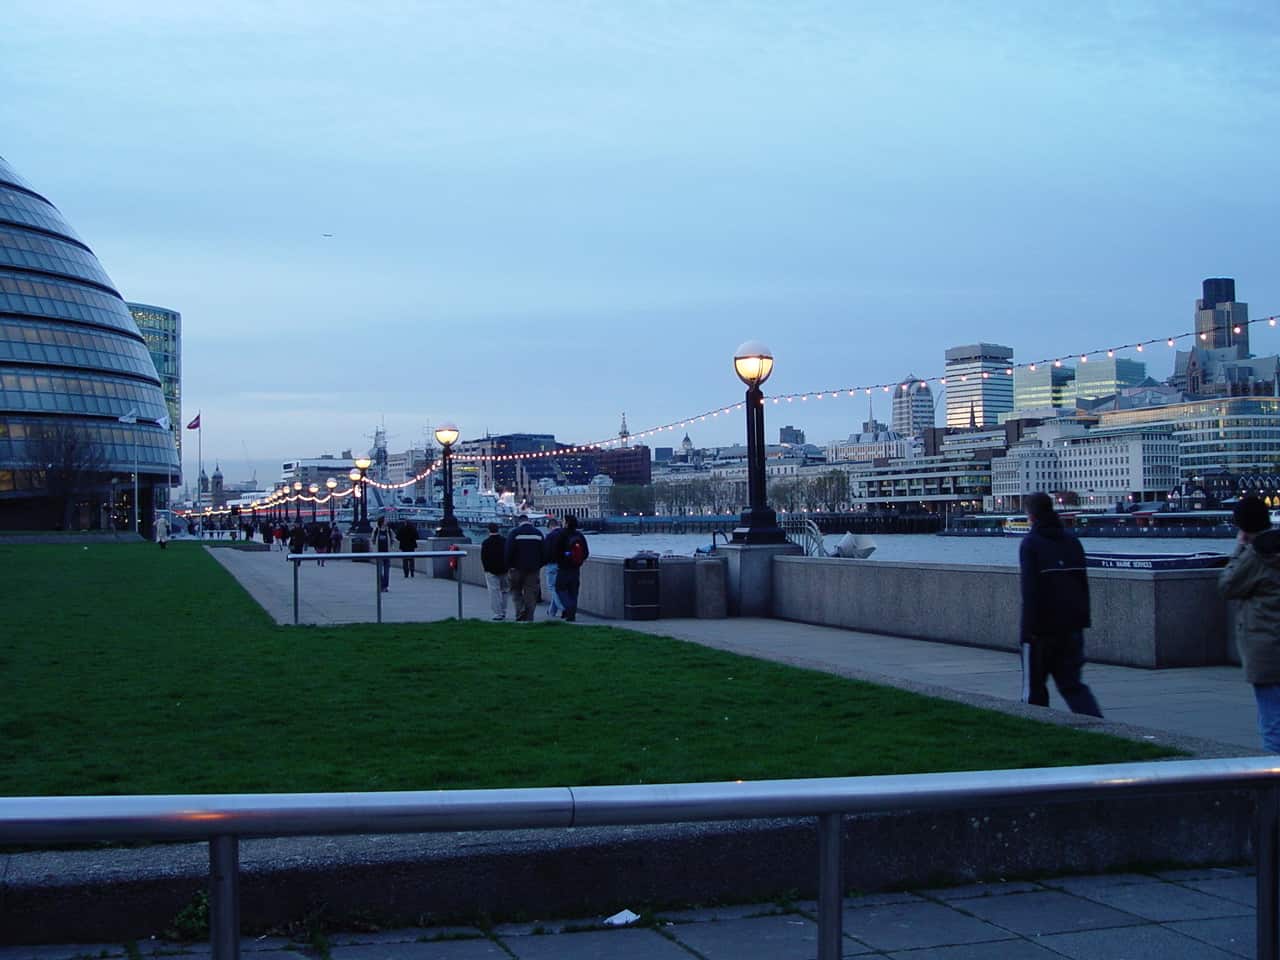 Walking along the River Thames